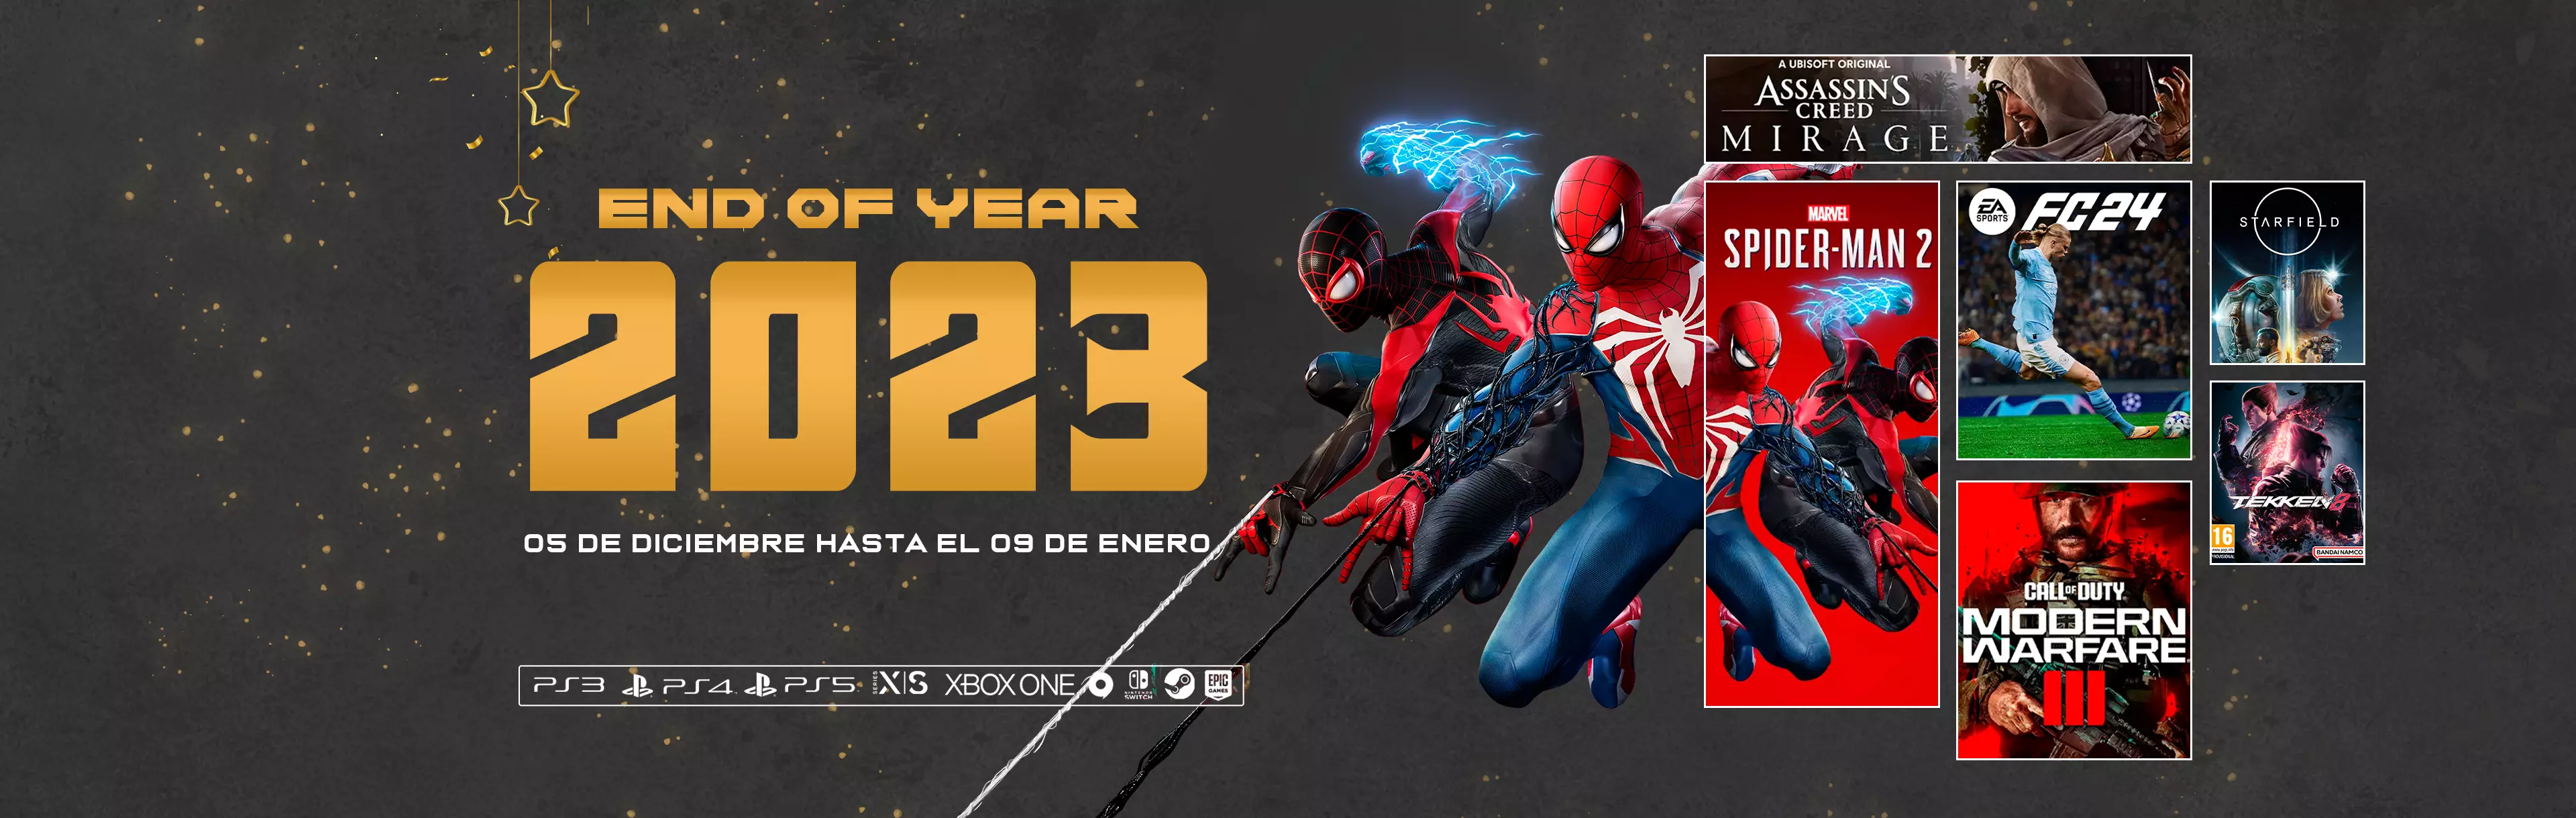 RESIDENT EVIL 5 PS5 – Juegos digitales Costa Rica